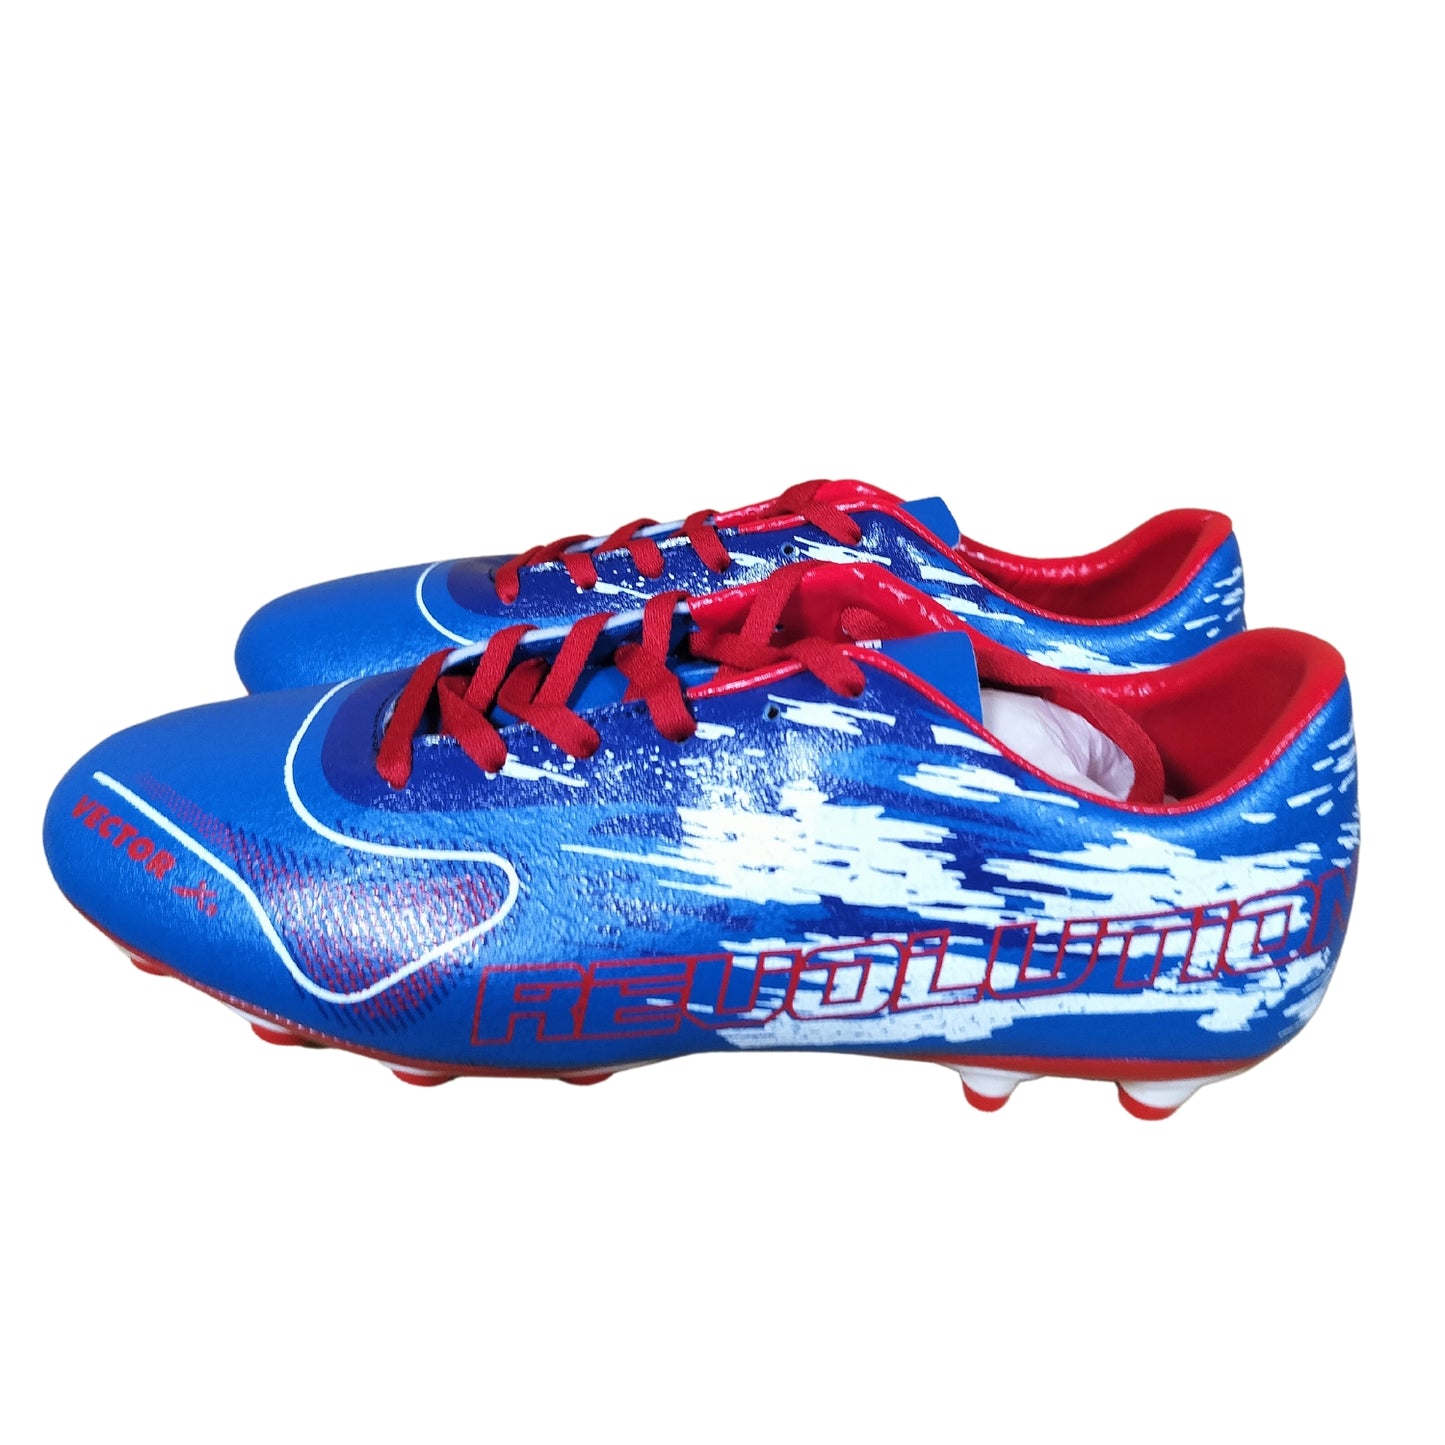 Vector X Revolution Football Shoe - Best Price online Prokicksports.com